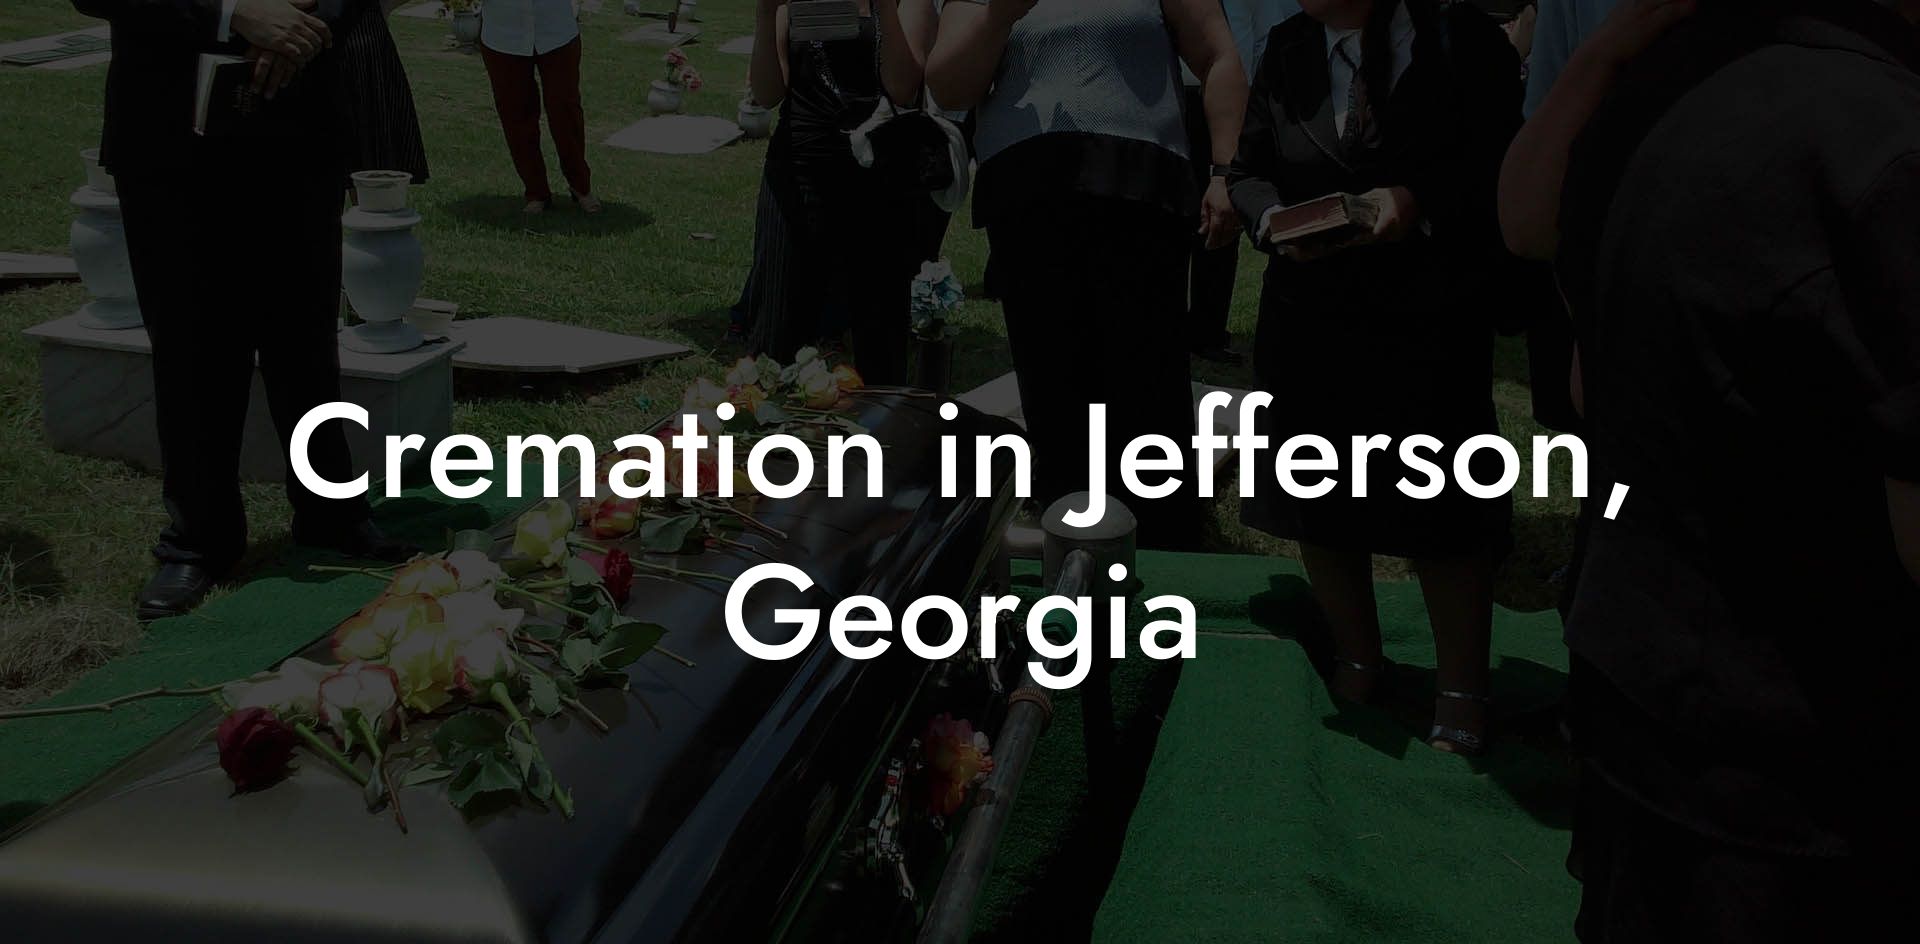 Cremation in Jefferson, Georgia